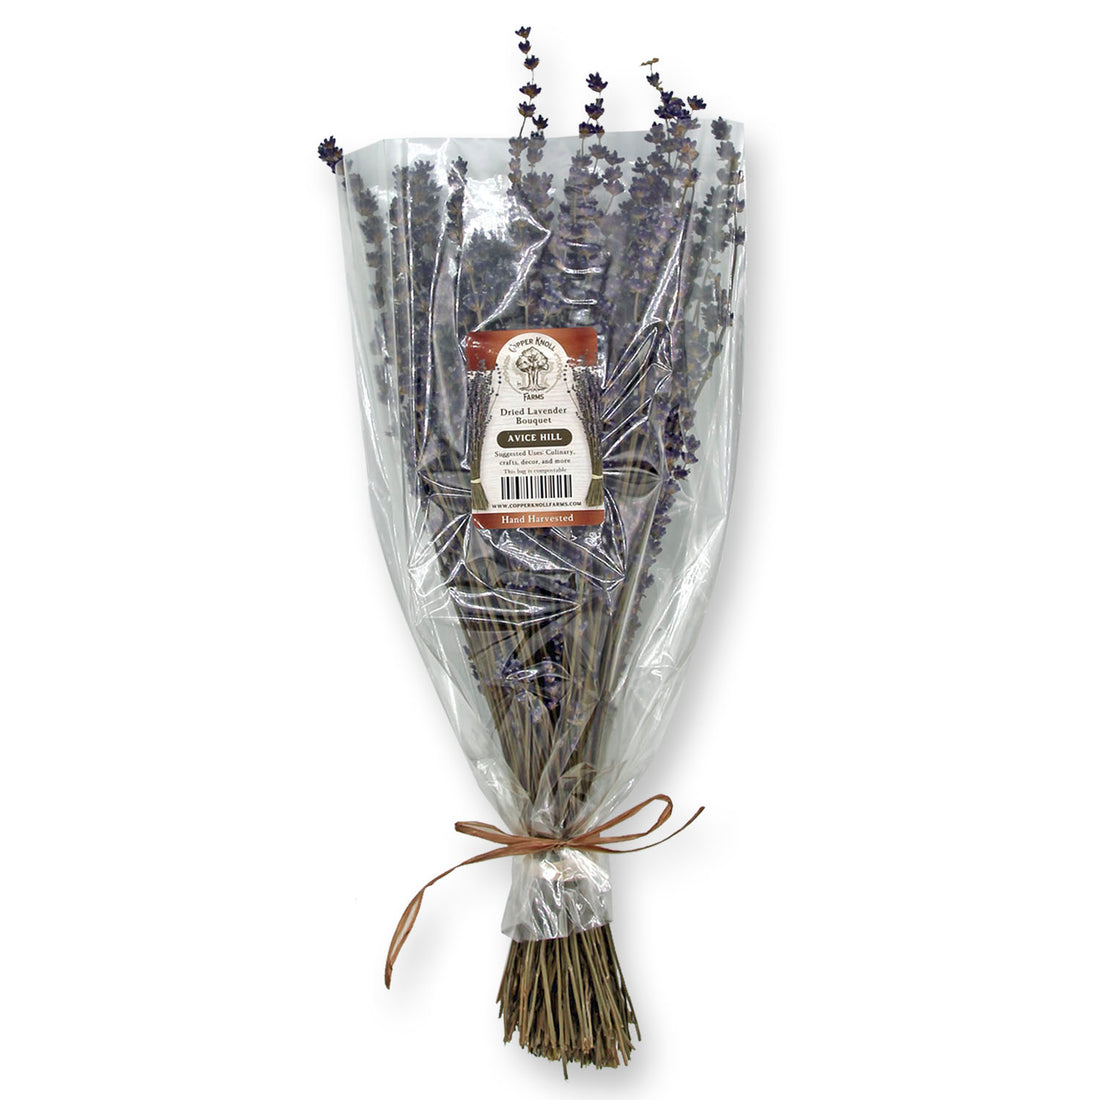 Dried Lavender Bouquet: Avice Hill